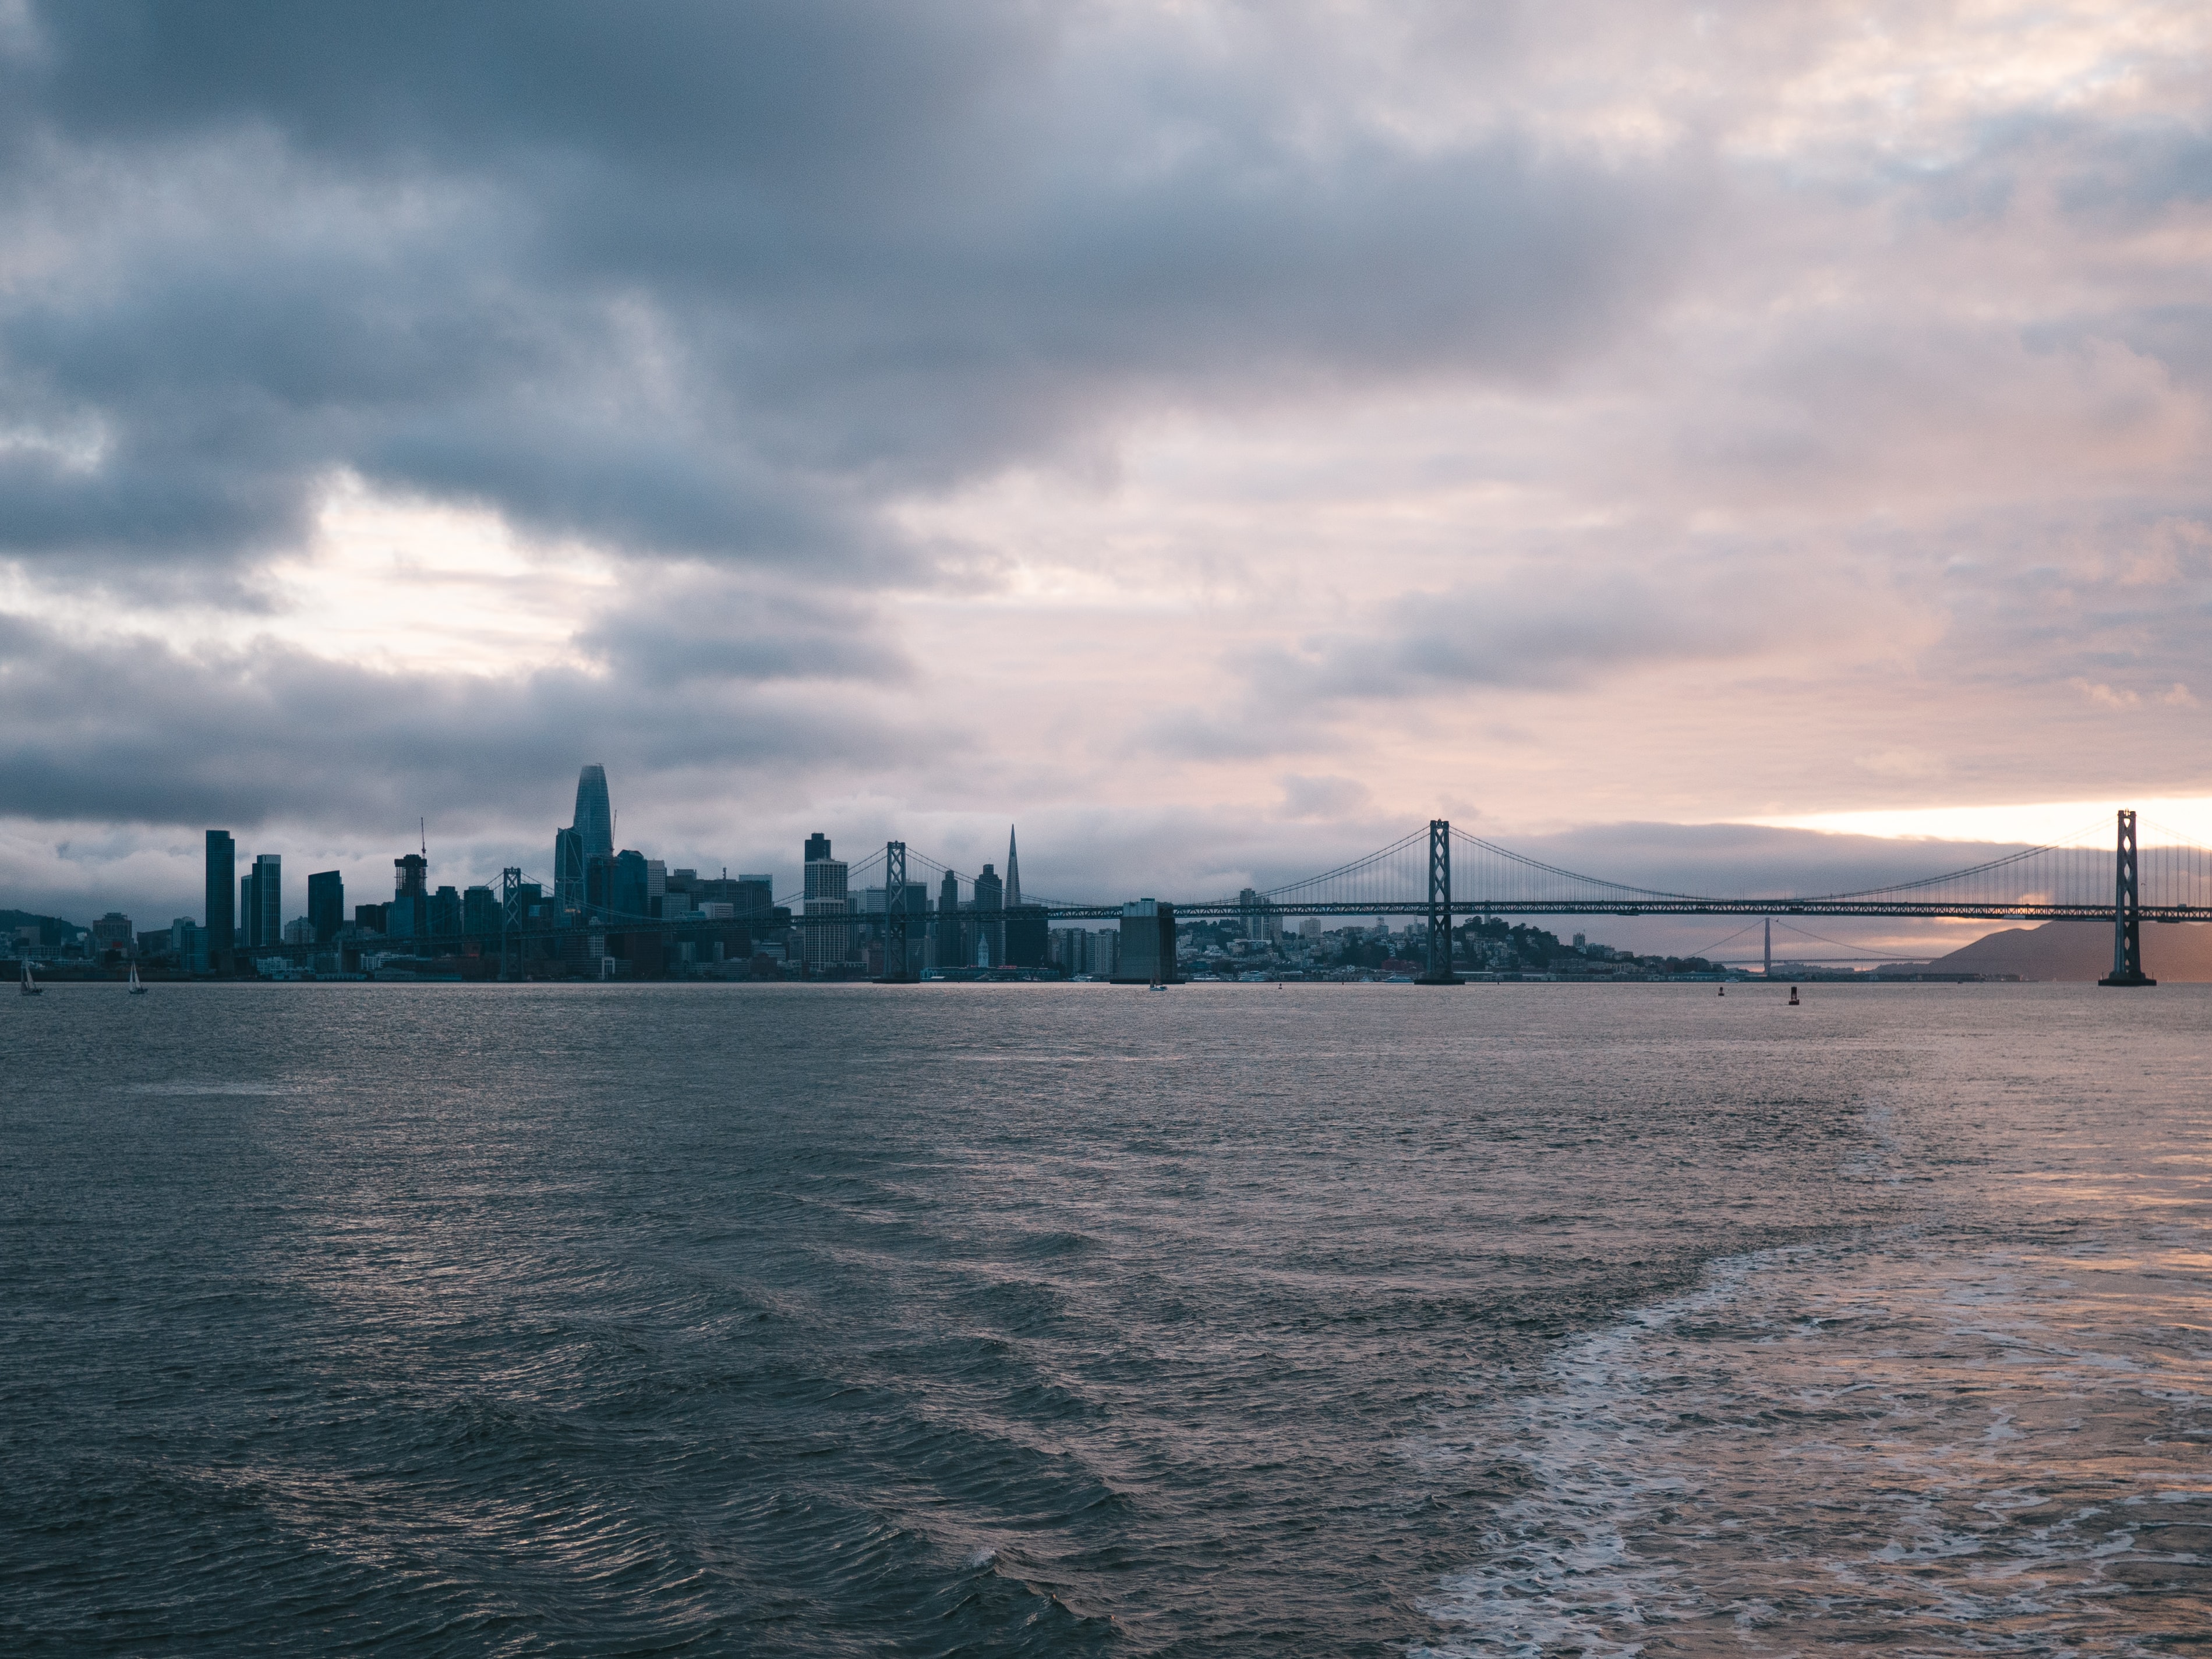 San Francisco Bay Ferry, Oakland, CA; image by Ronan Furuta, via Unsplash.com.